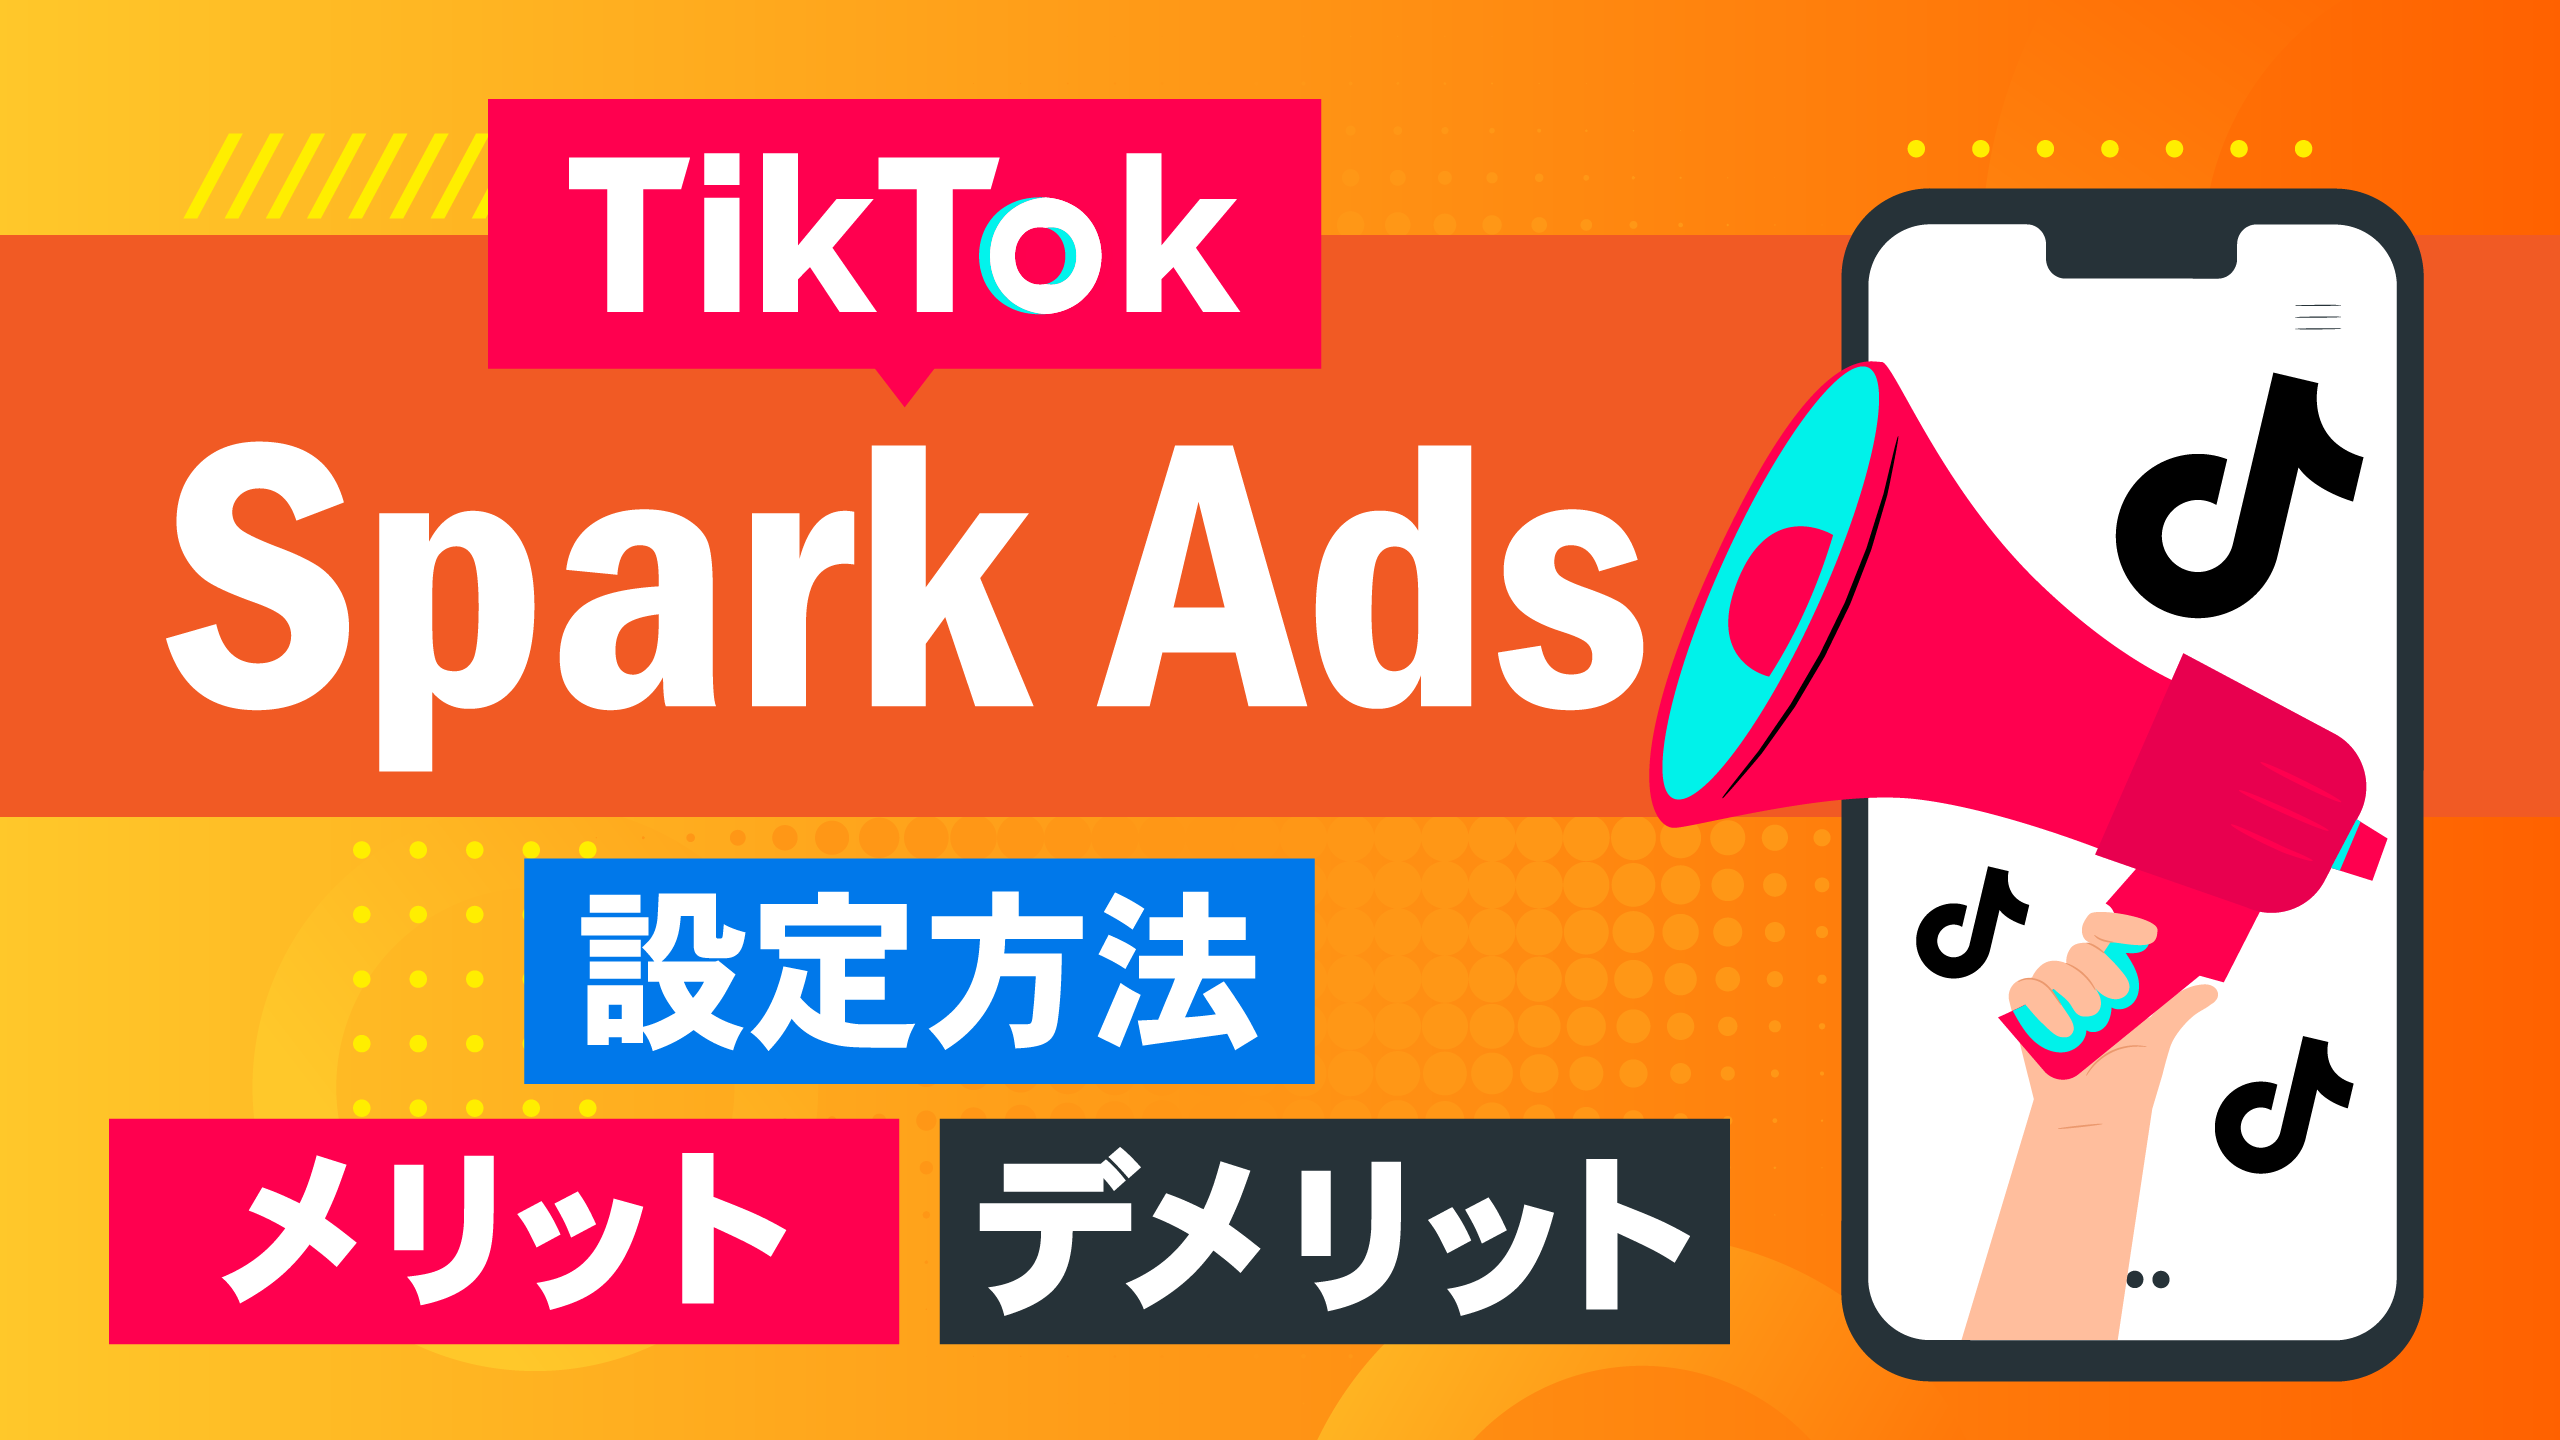 TikTok Spark Adsとは？設定方法,メリット/デメリットも